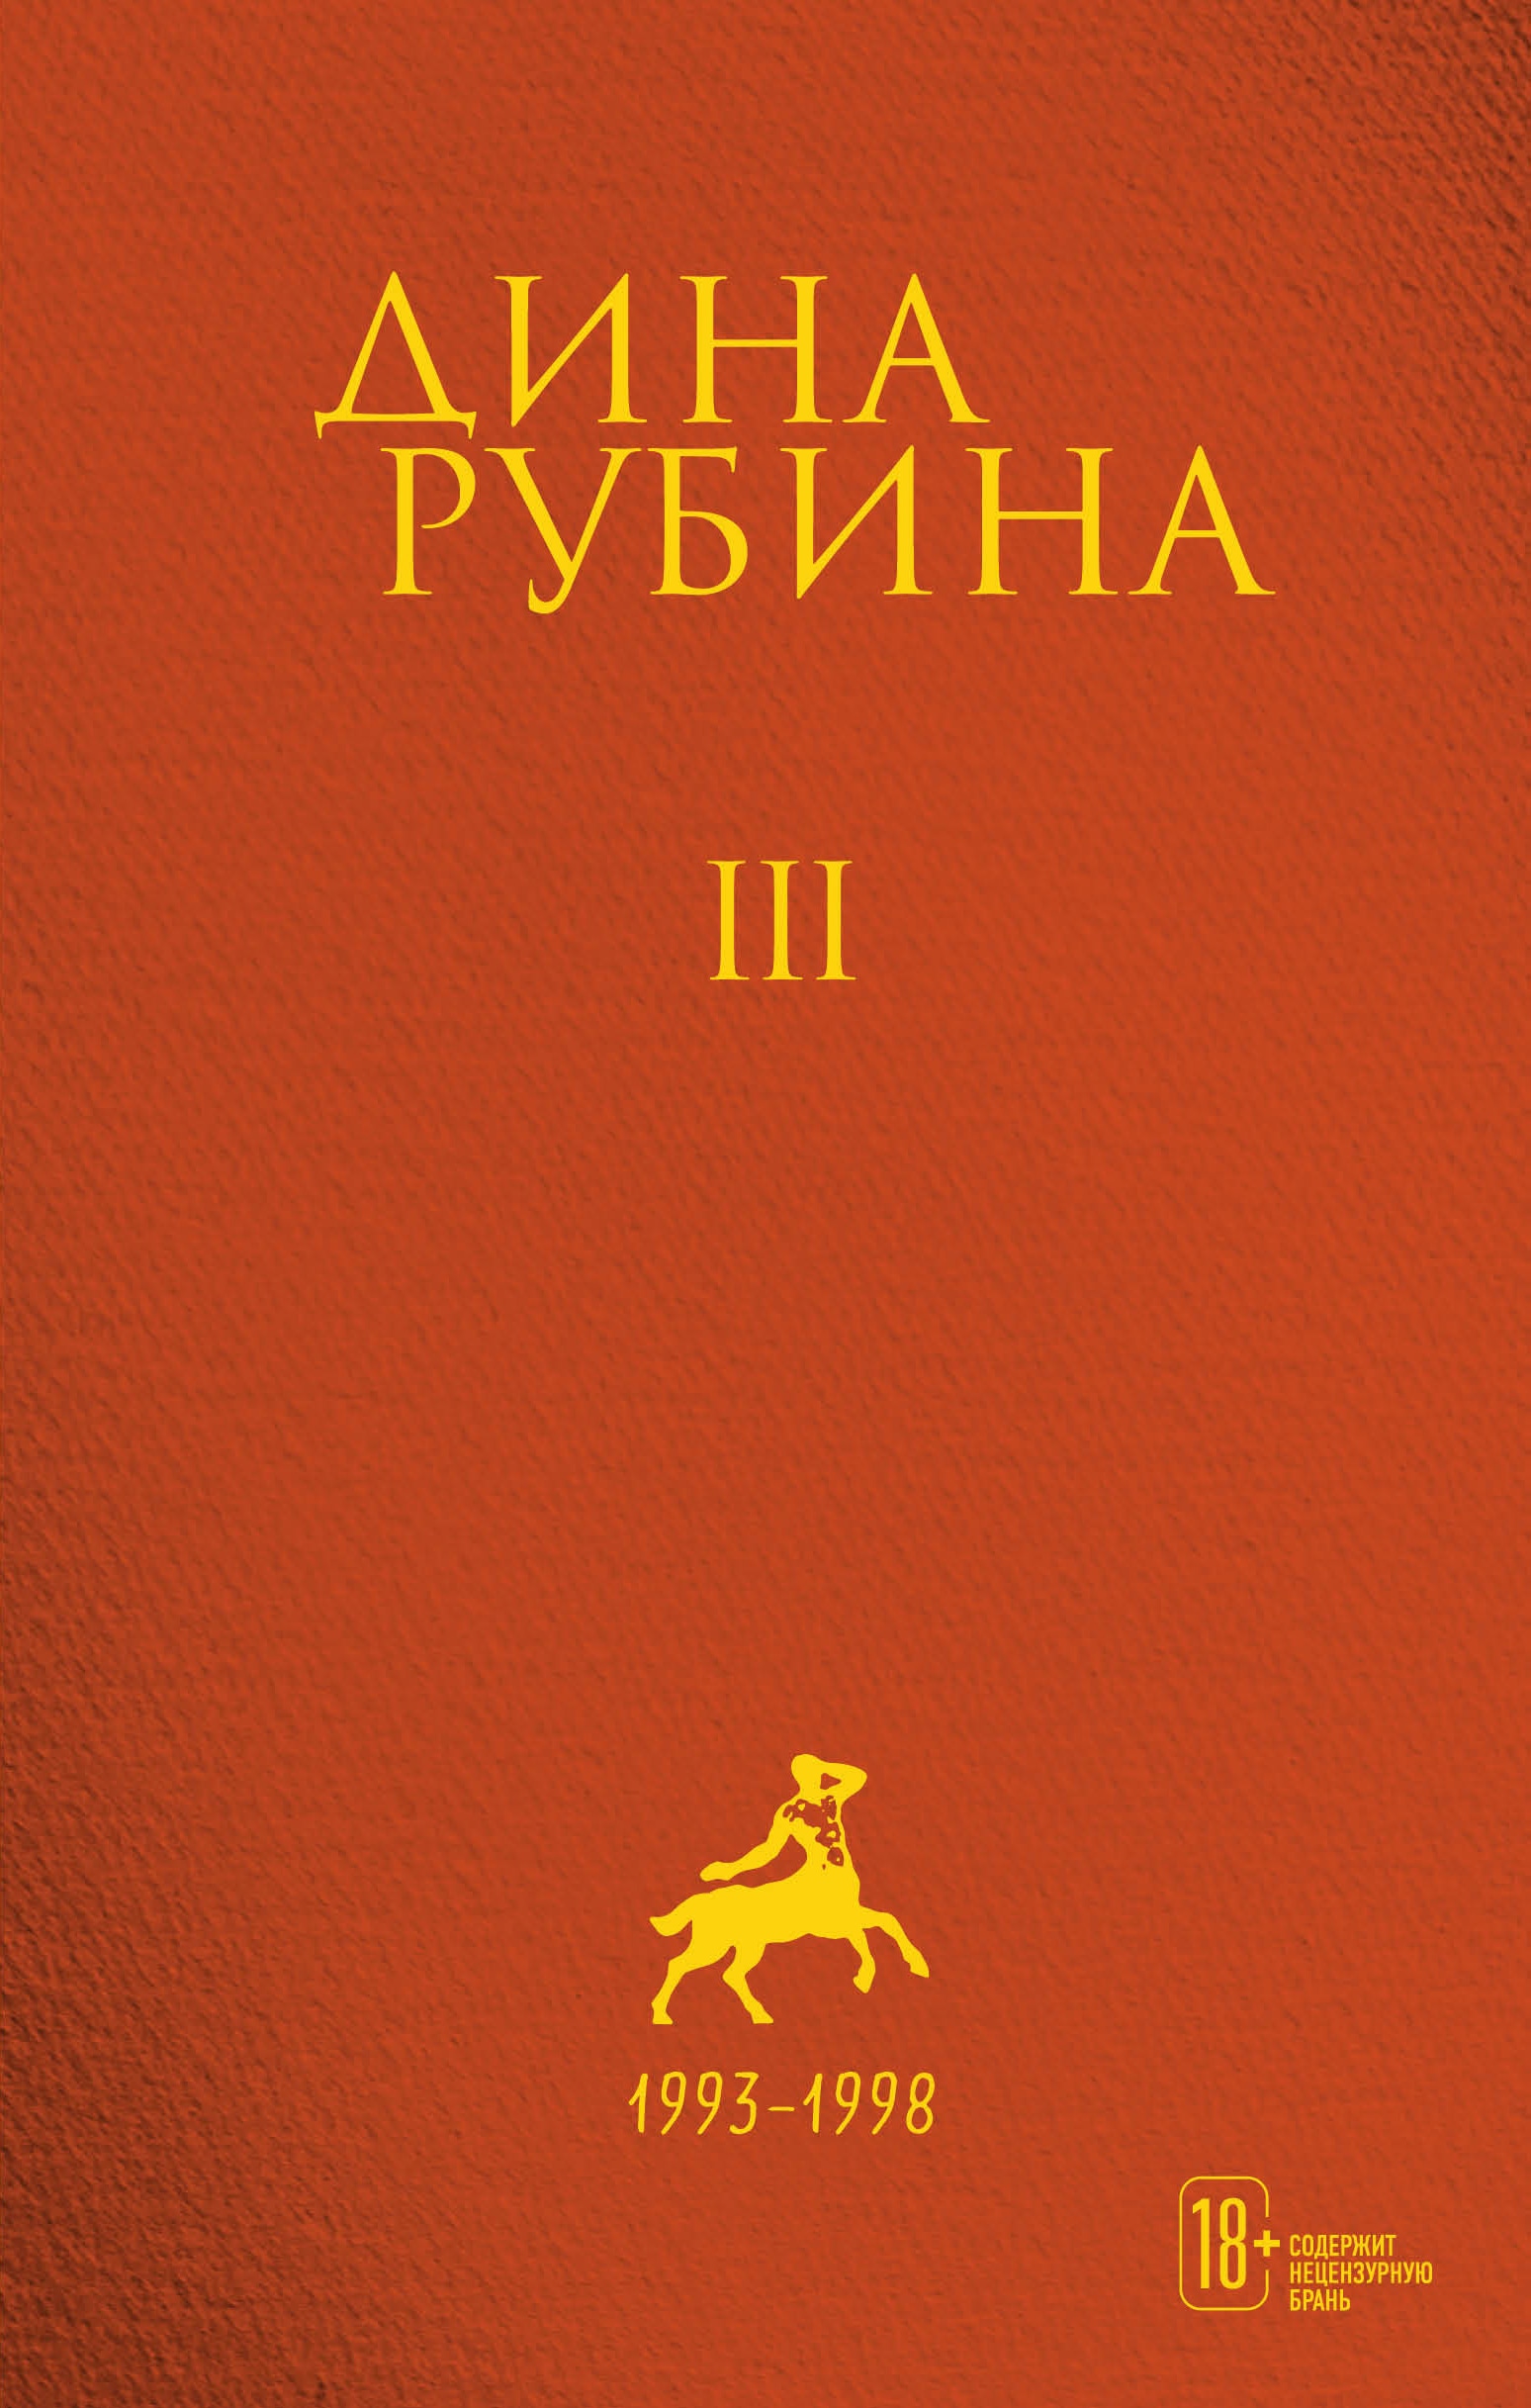 Book “Том 3” by Дина Рубина — July 7, 2021